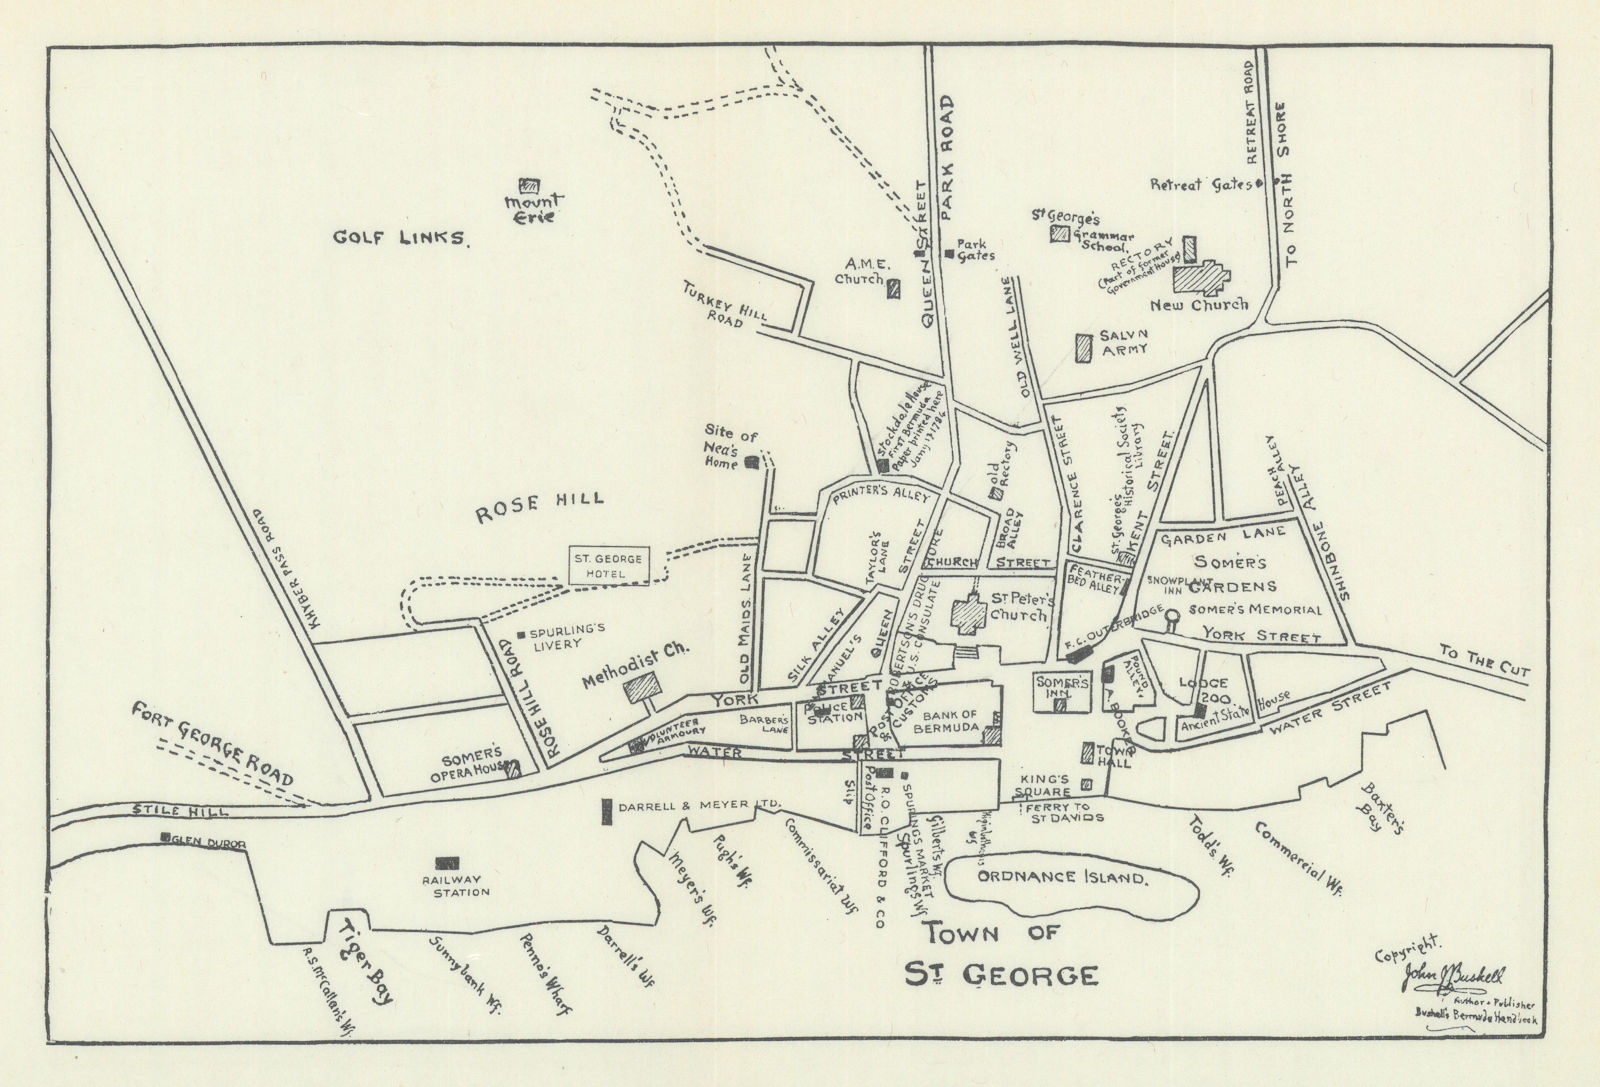 St. George, Bermuda town / city plan by John Bushell 1938 old vintage map